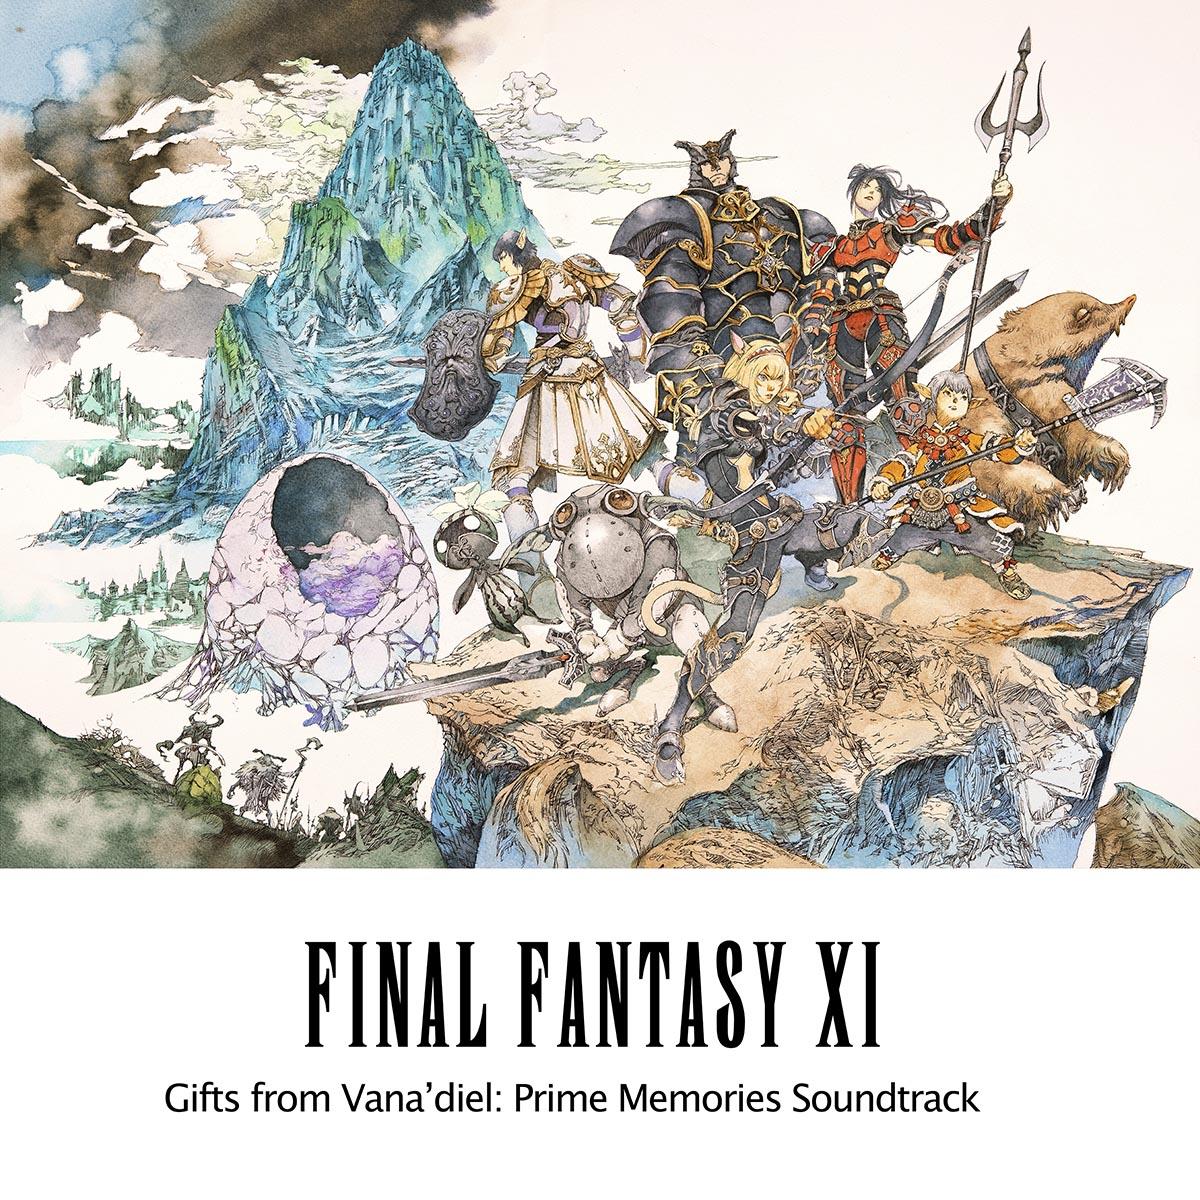 Final Fantasy XI Gifts from Vana'diel: Prime Memories Soundtrack